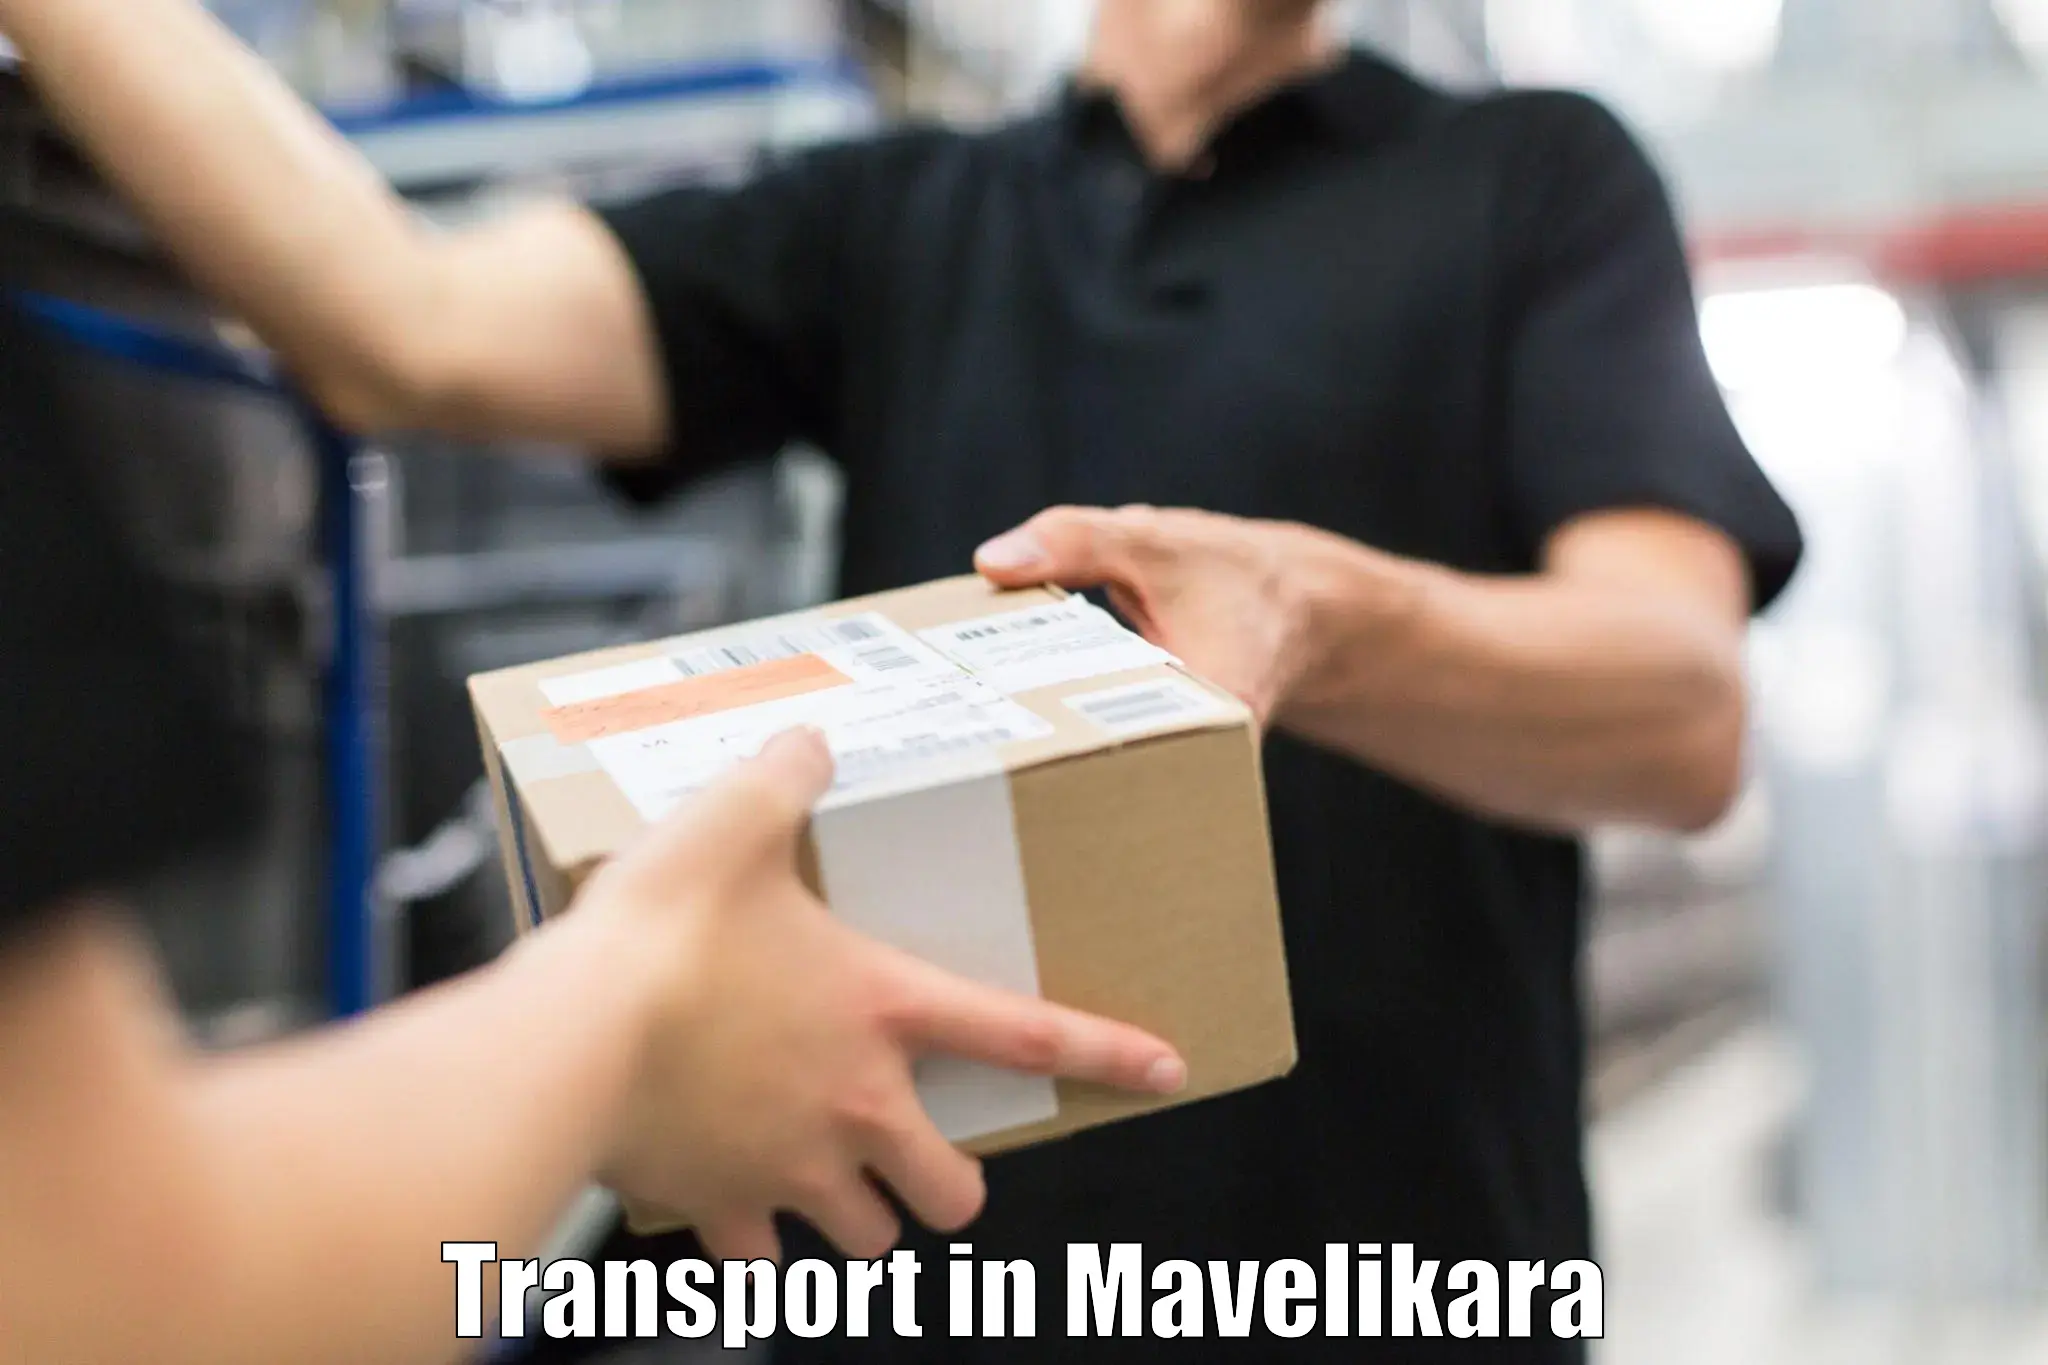 Container transportation services in Mavelikara